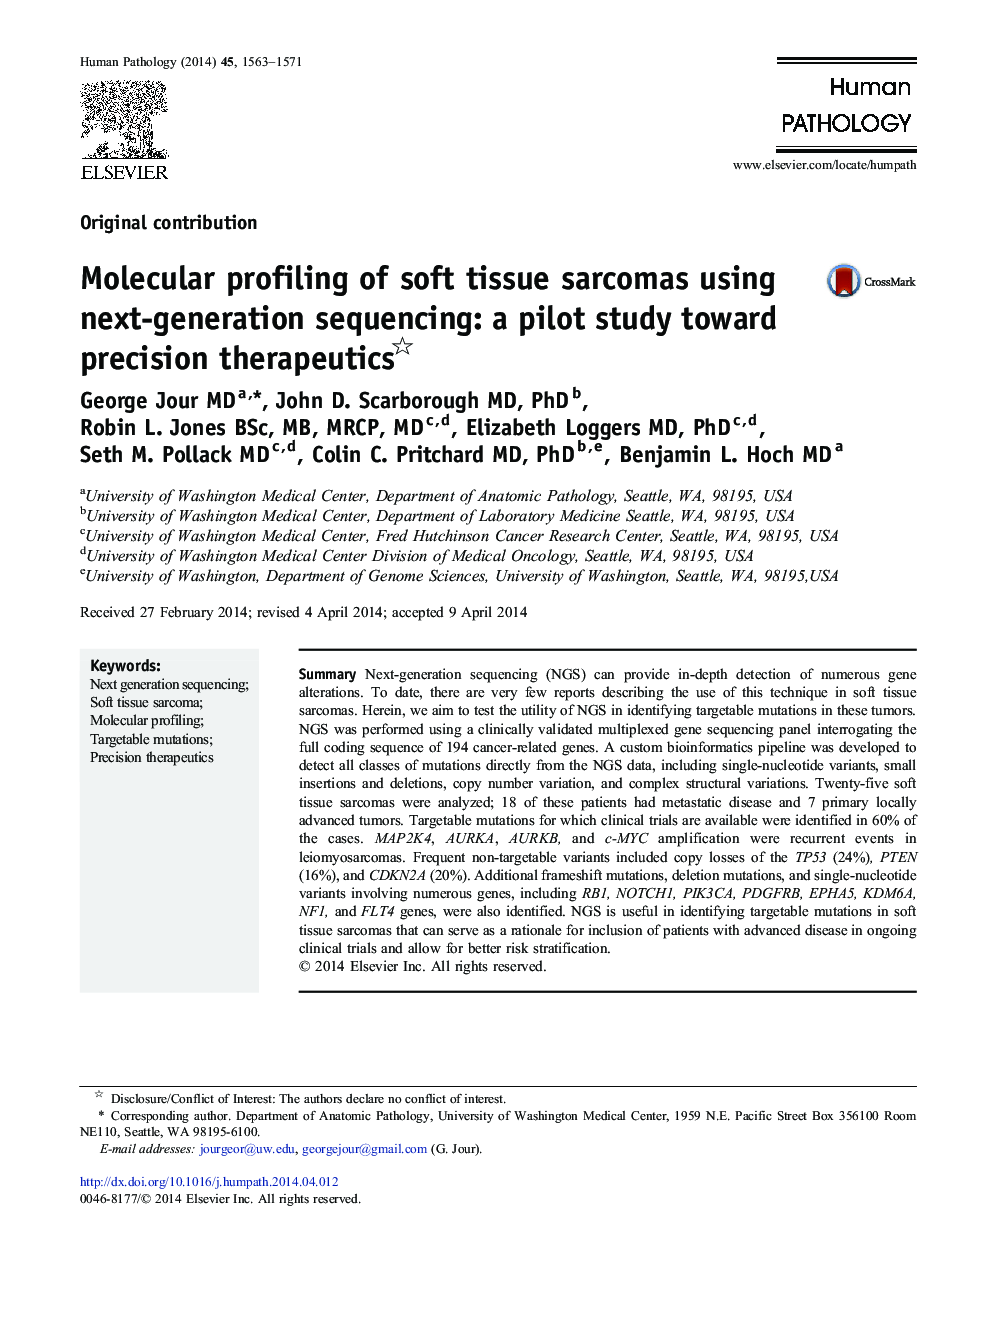 Molecular profiling of soft tissue sarcomas using next-generation sequencing: a pilot study toward precision therapeutics